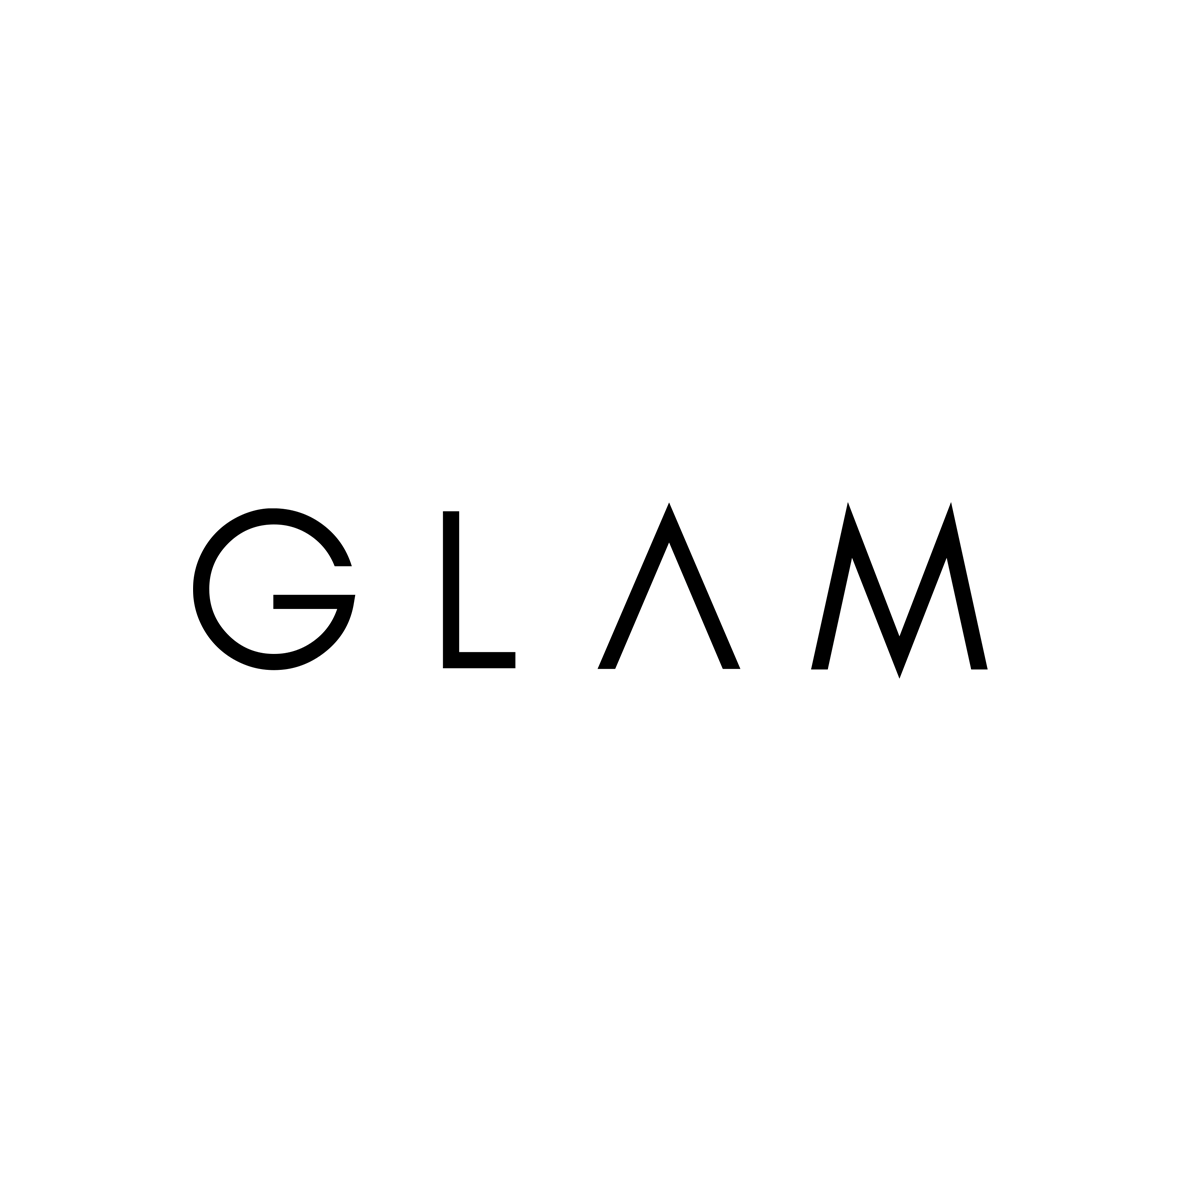 Glam Logo - Pin by Kami Marshall on My love for doing hair | Hair salon logos ...